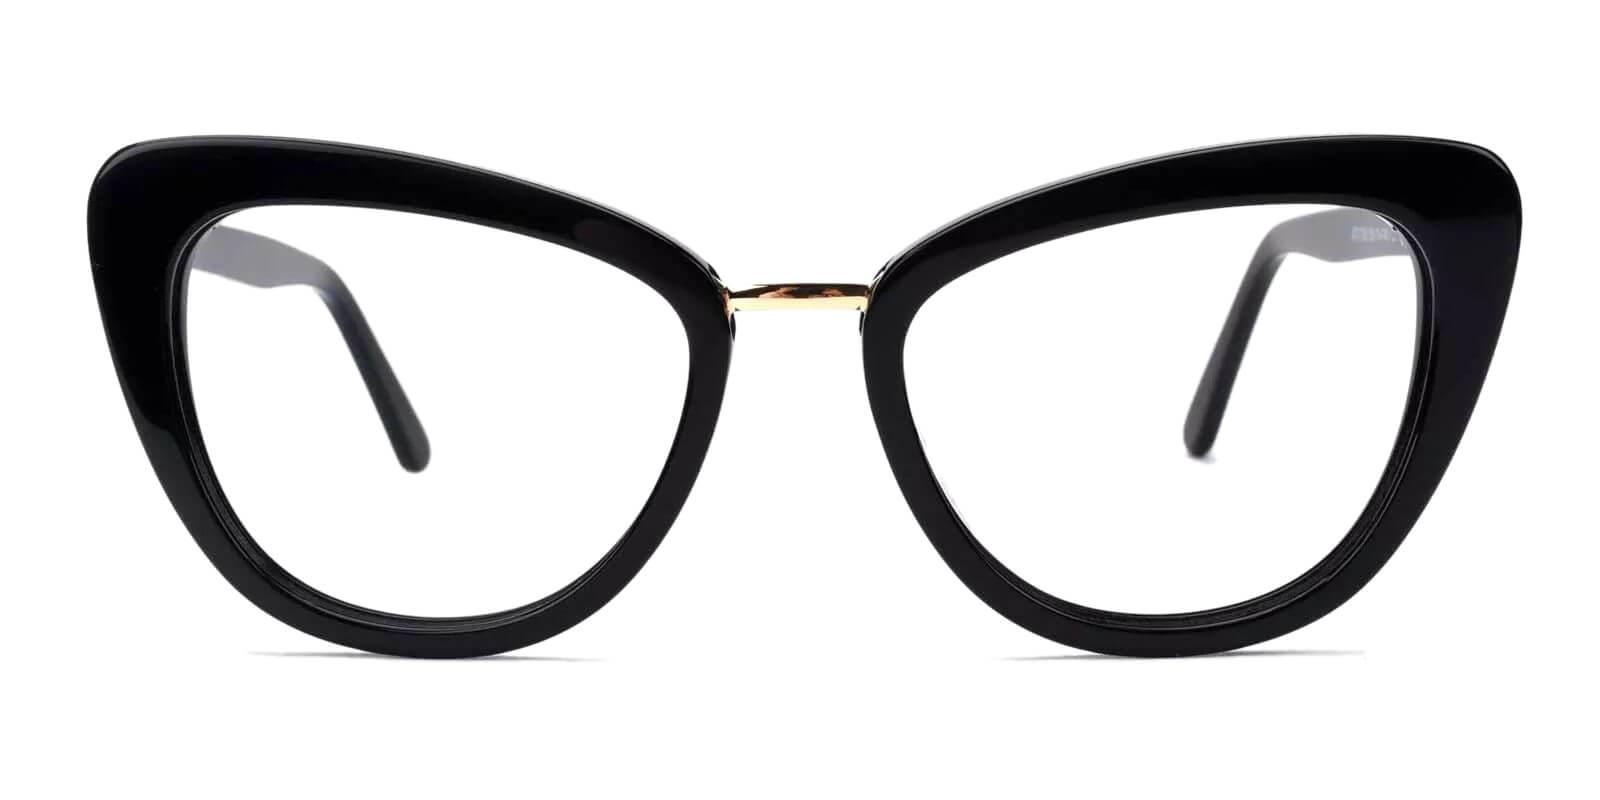 Lizzy Black Acetate Eyeglasses , Fashion , SpringHinges , UniversalBridgeFit Frames from ABBE Glasses